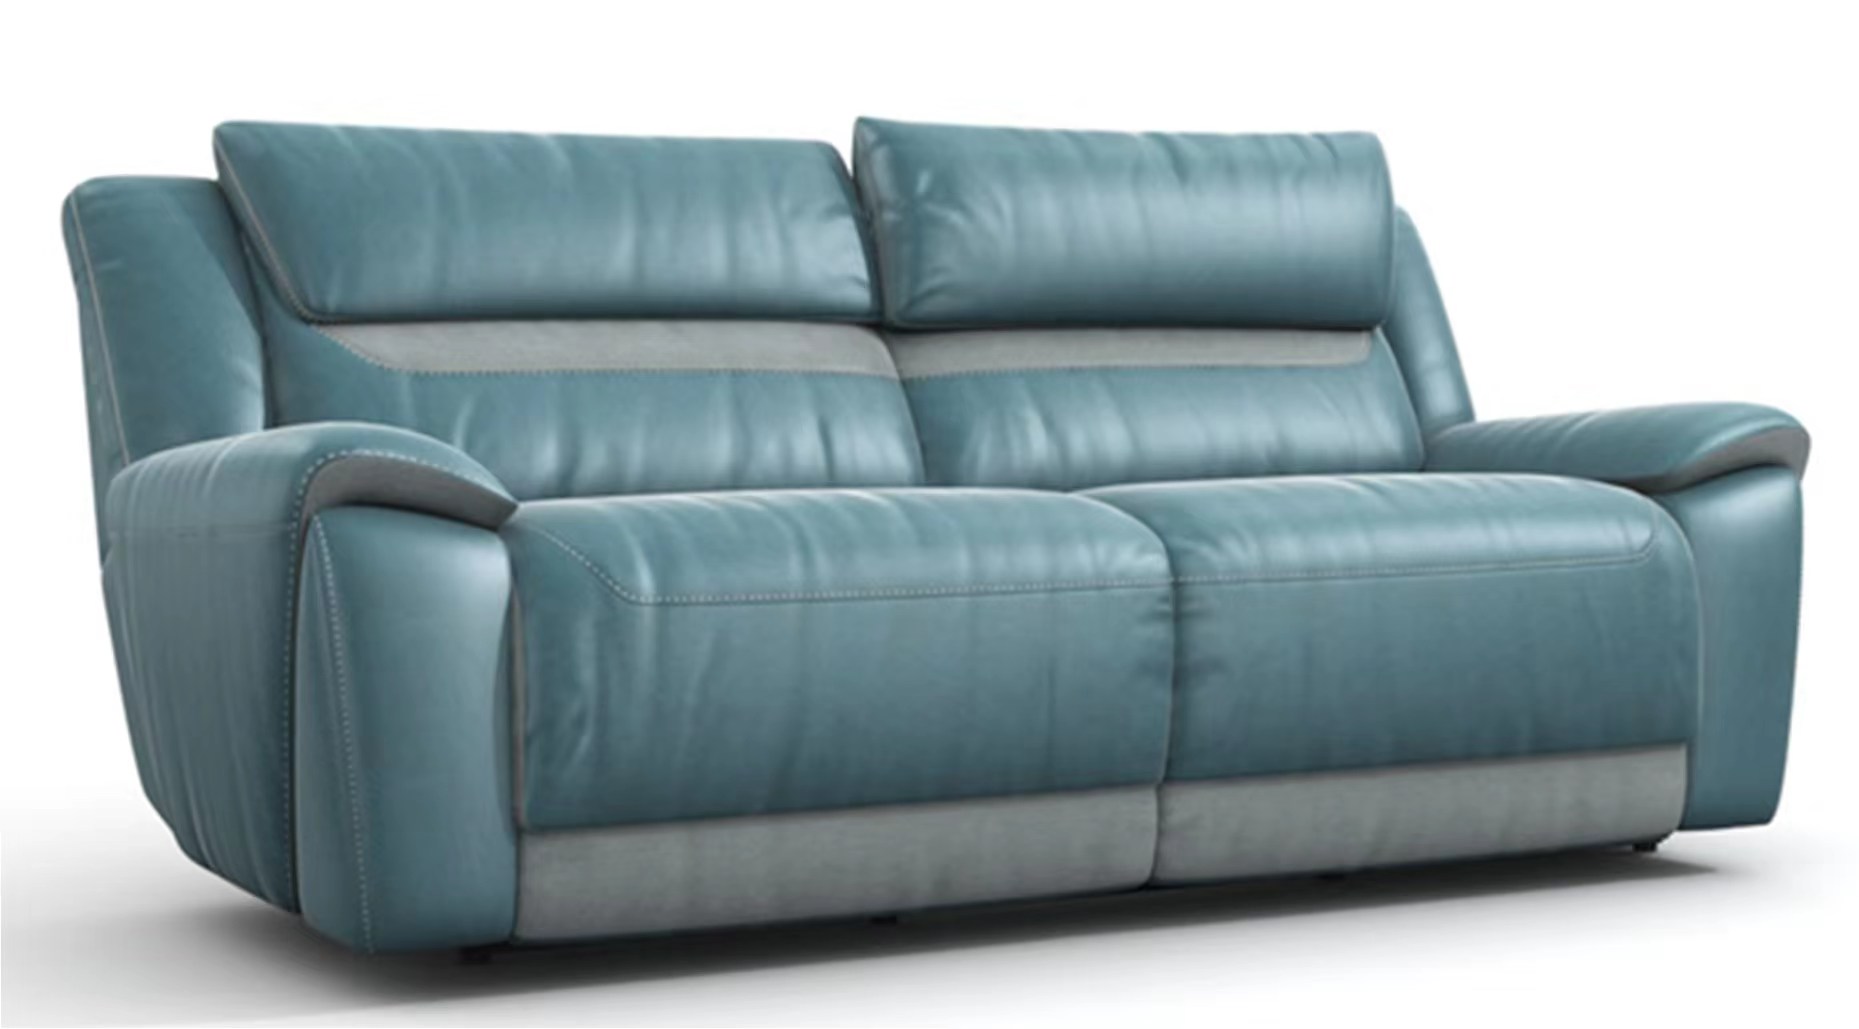 classic leather recliner sofa